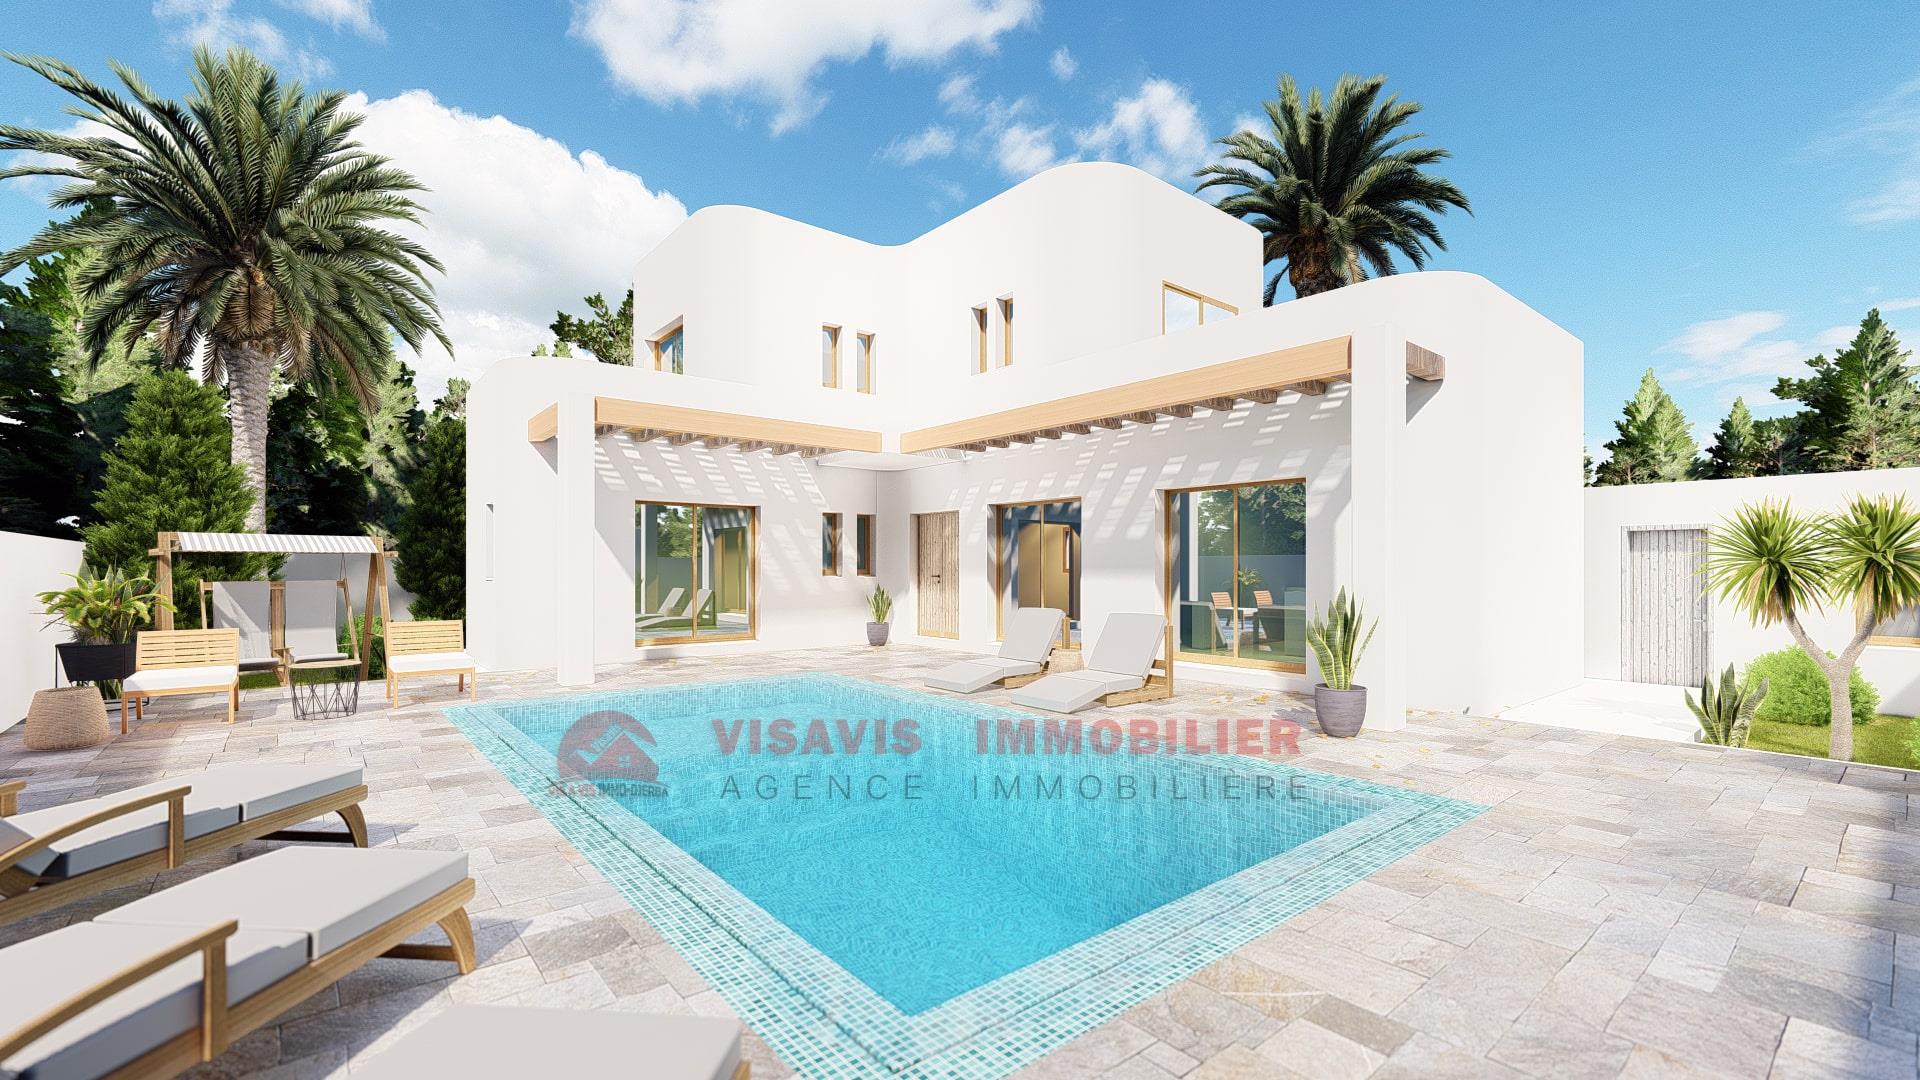 Vente villa neuve à Djerba - zone urbaine - titre bleu 